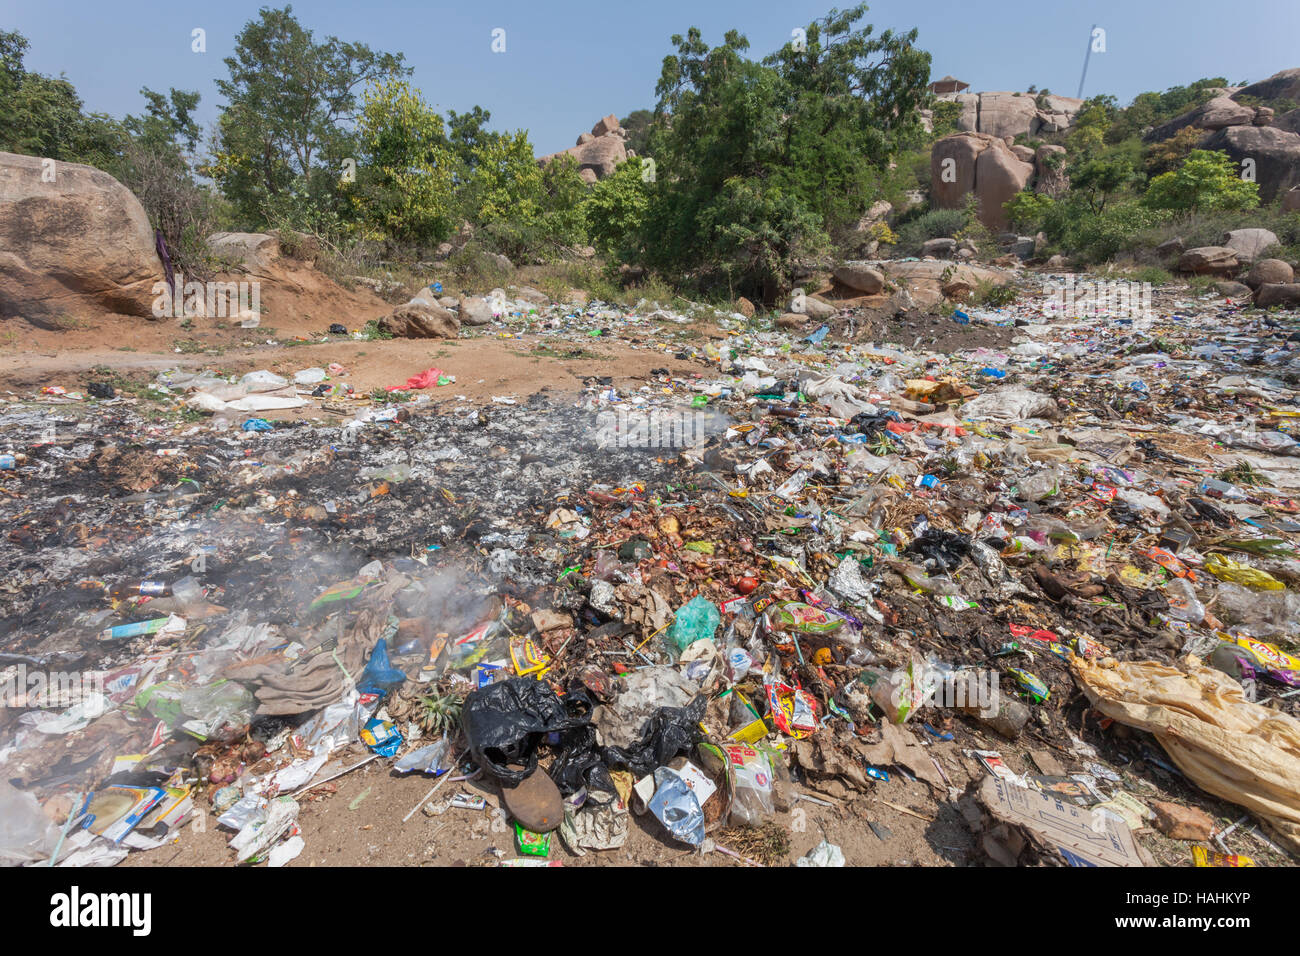 Rubbish strewn on open waste land near the town of Hampi, India Stock Photo